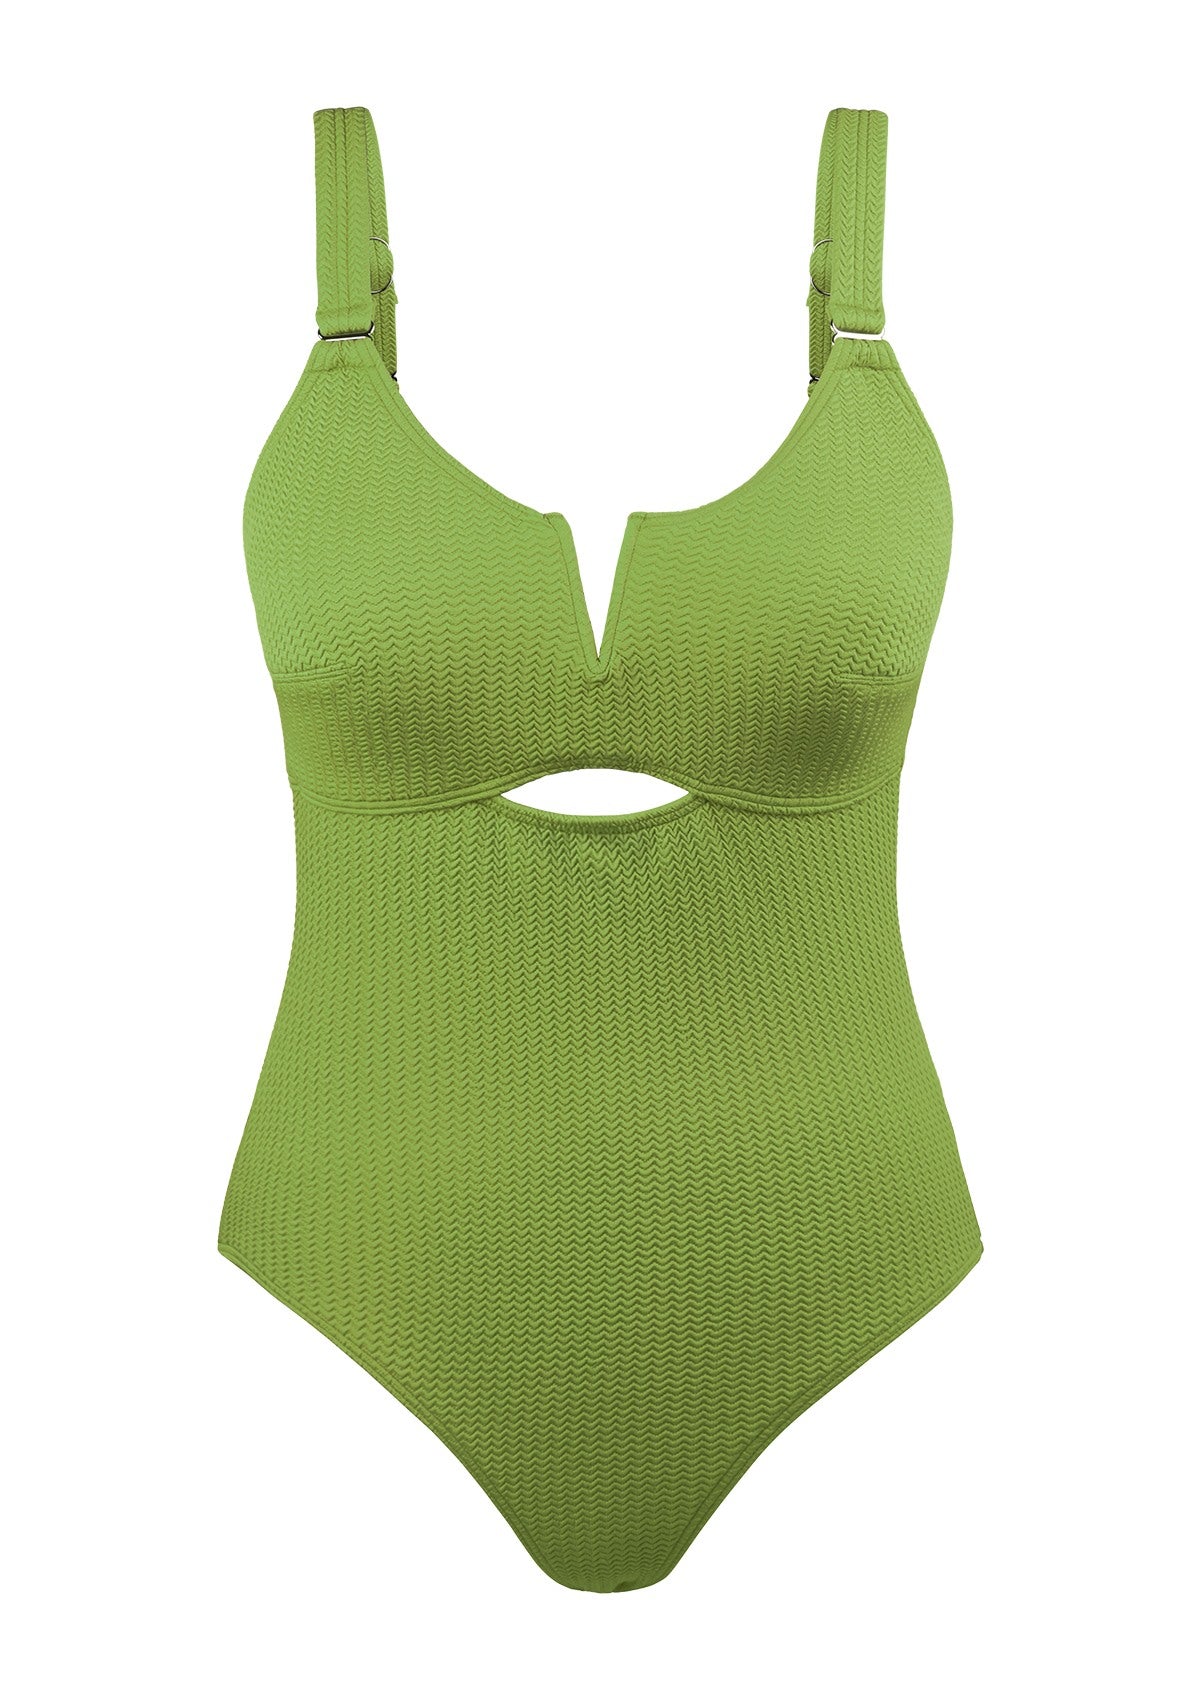 V-wire Plunge Textured One-piece Cutout Swimsuit - 4XL / Seafoam Green